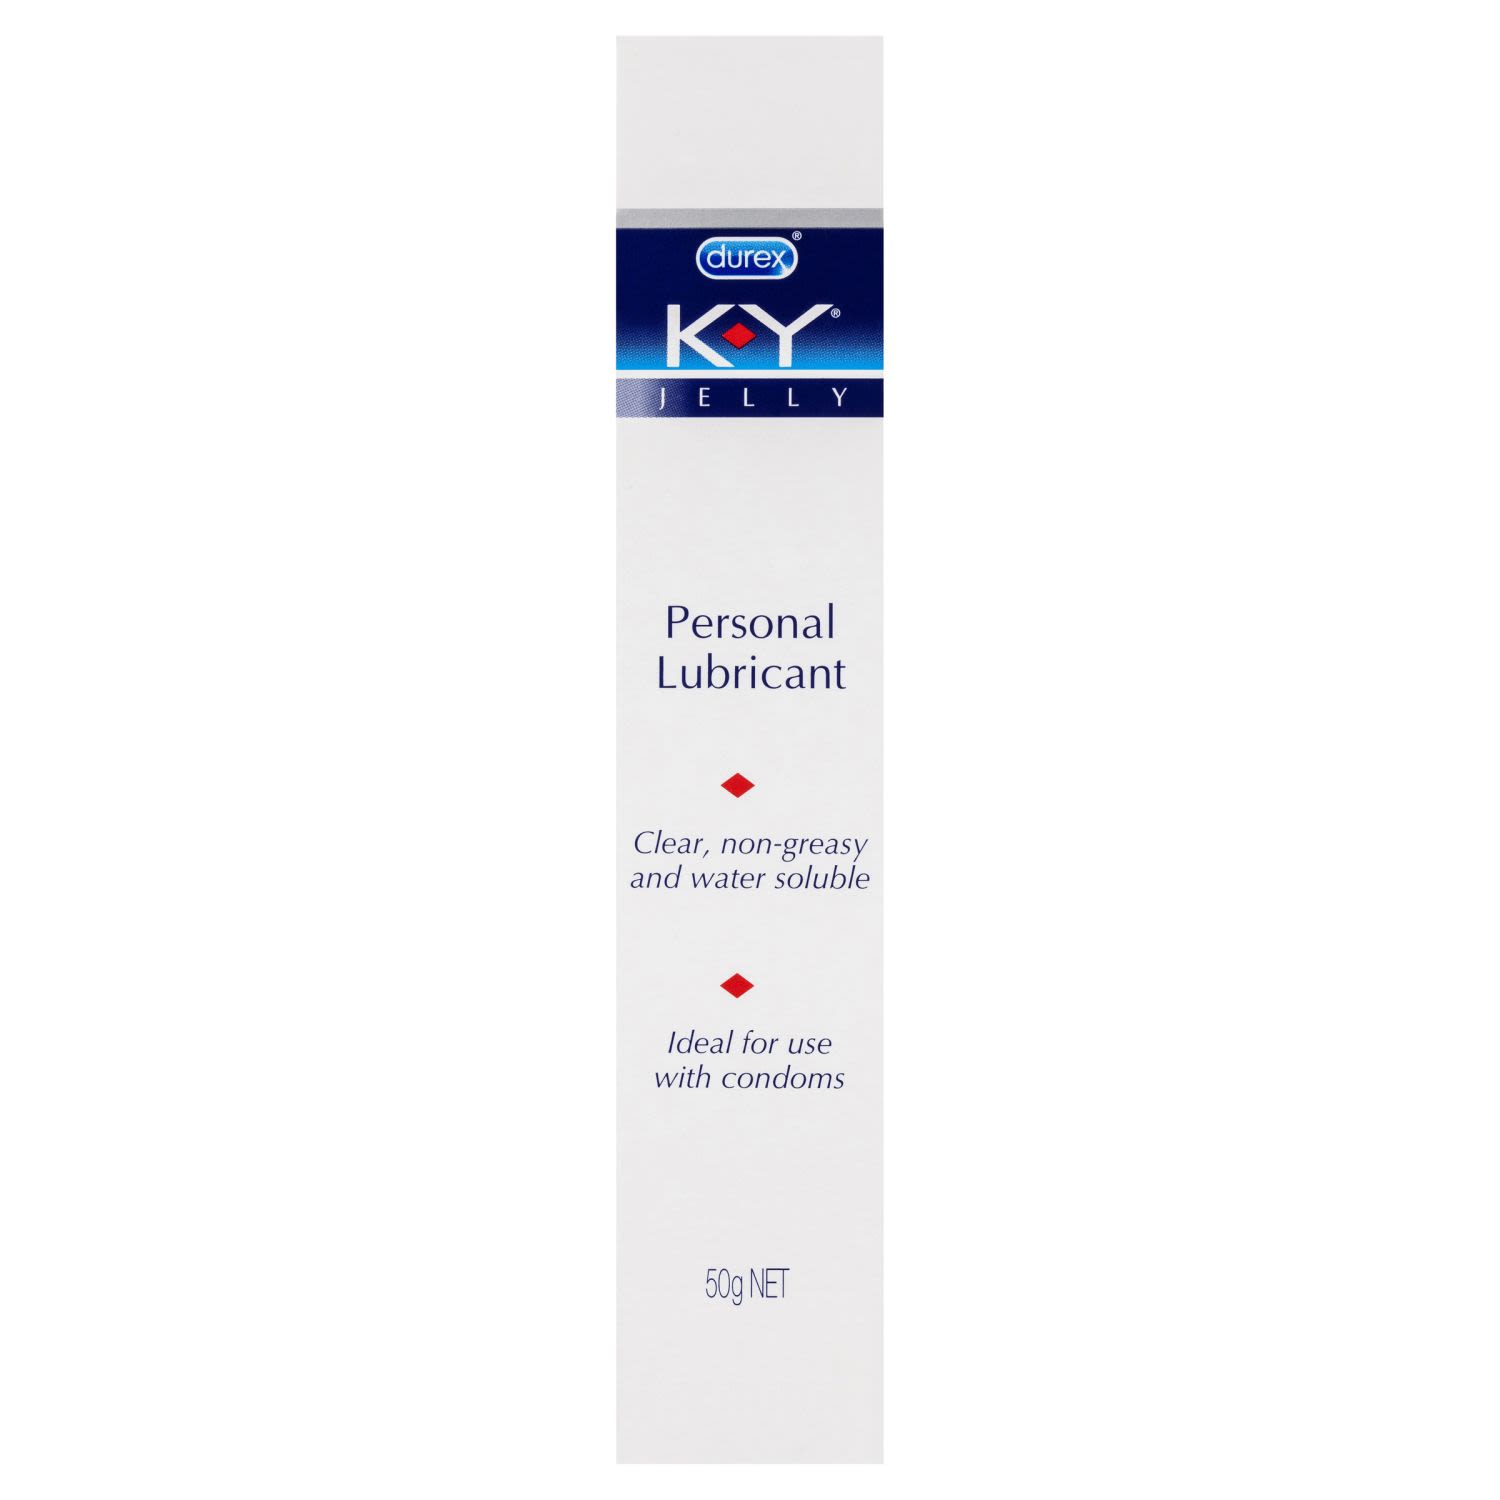 Durex K-Y Personal Lubricant Use with Condoms, 50 Gram